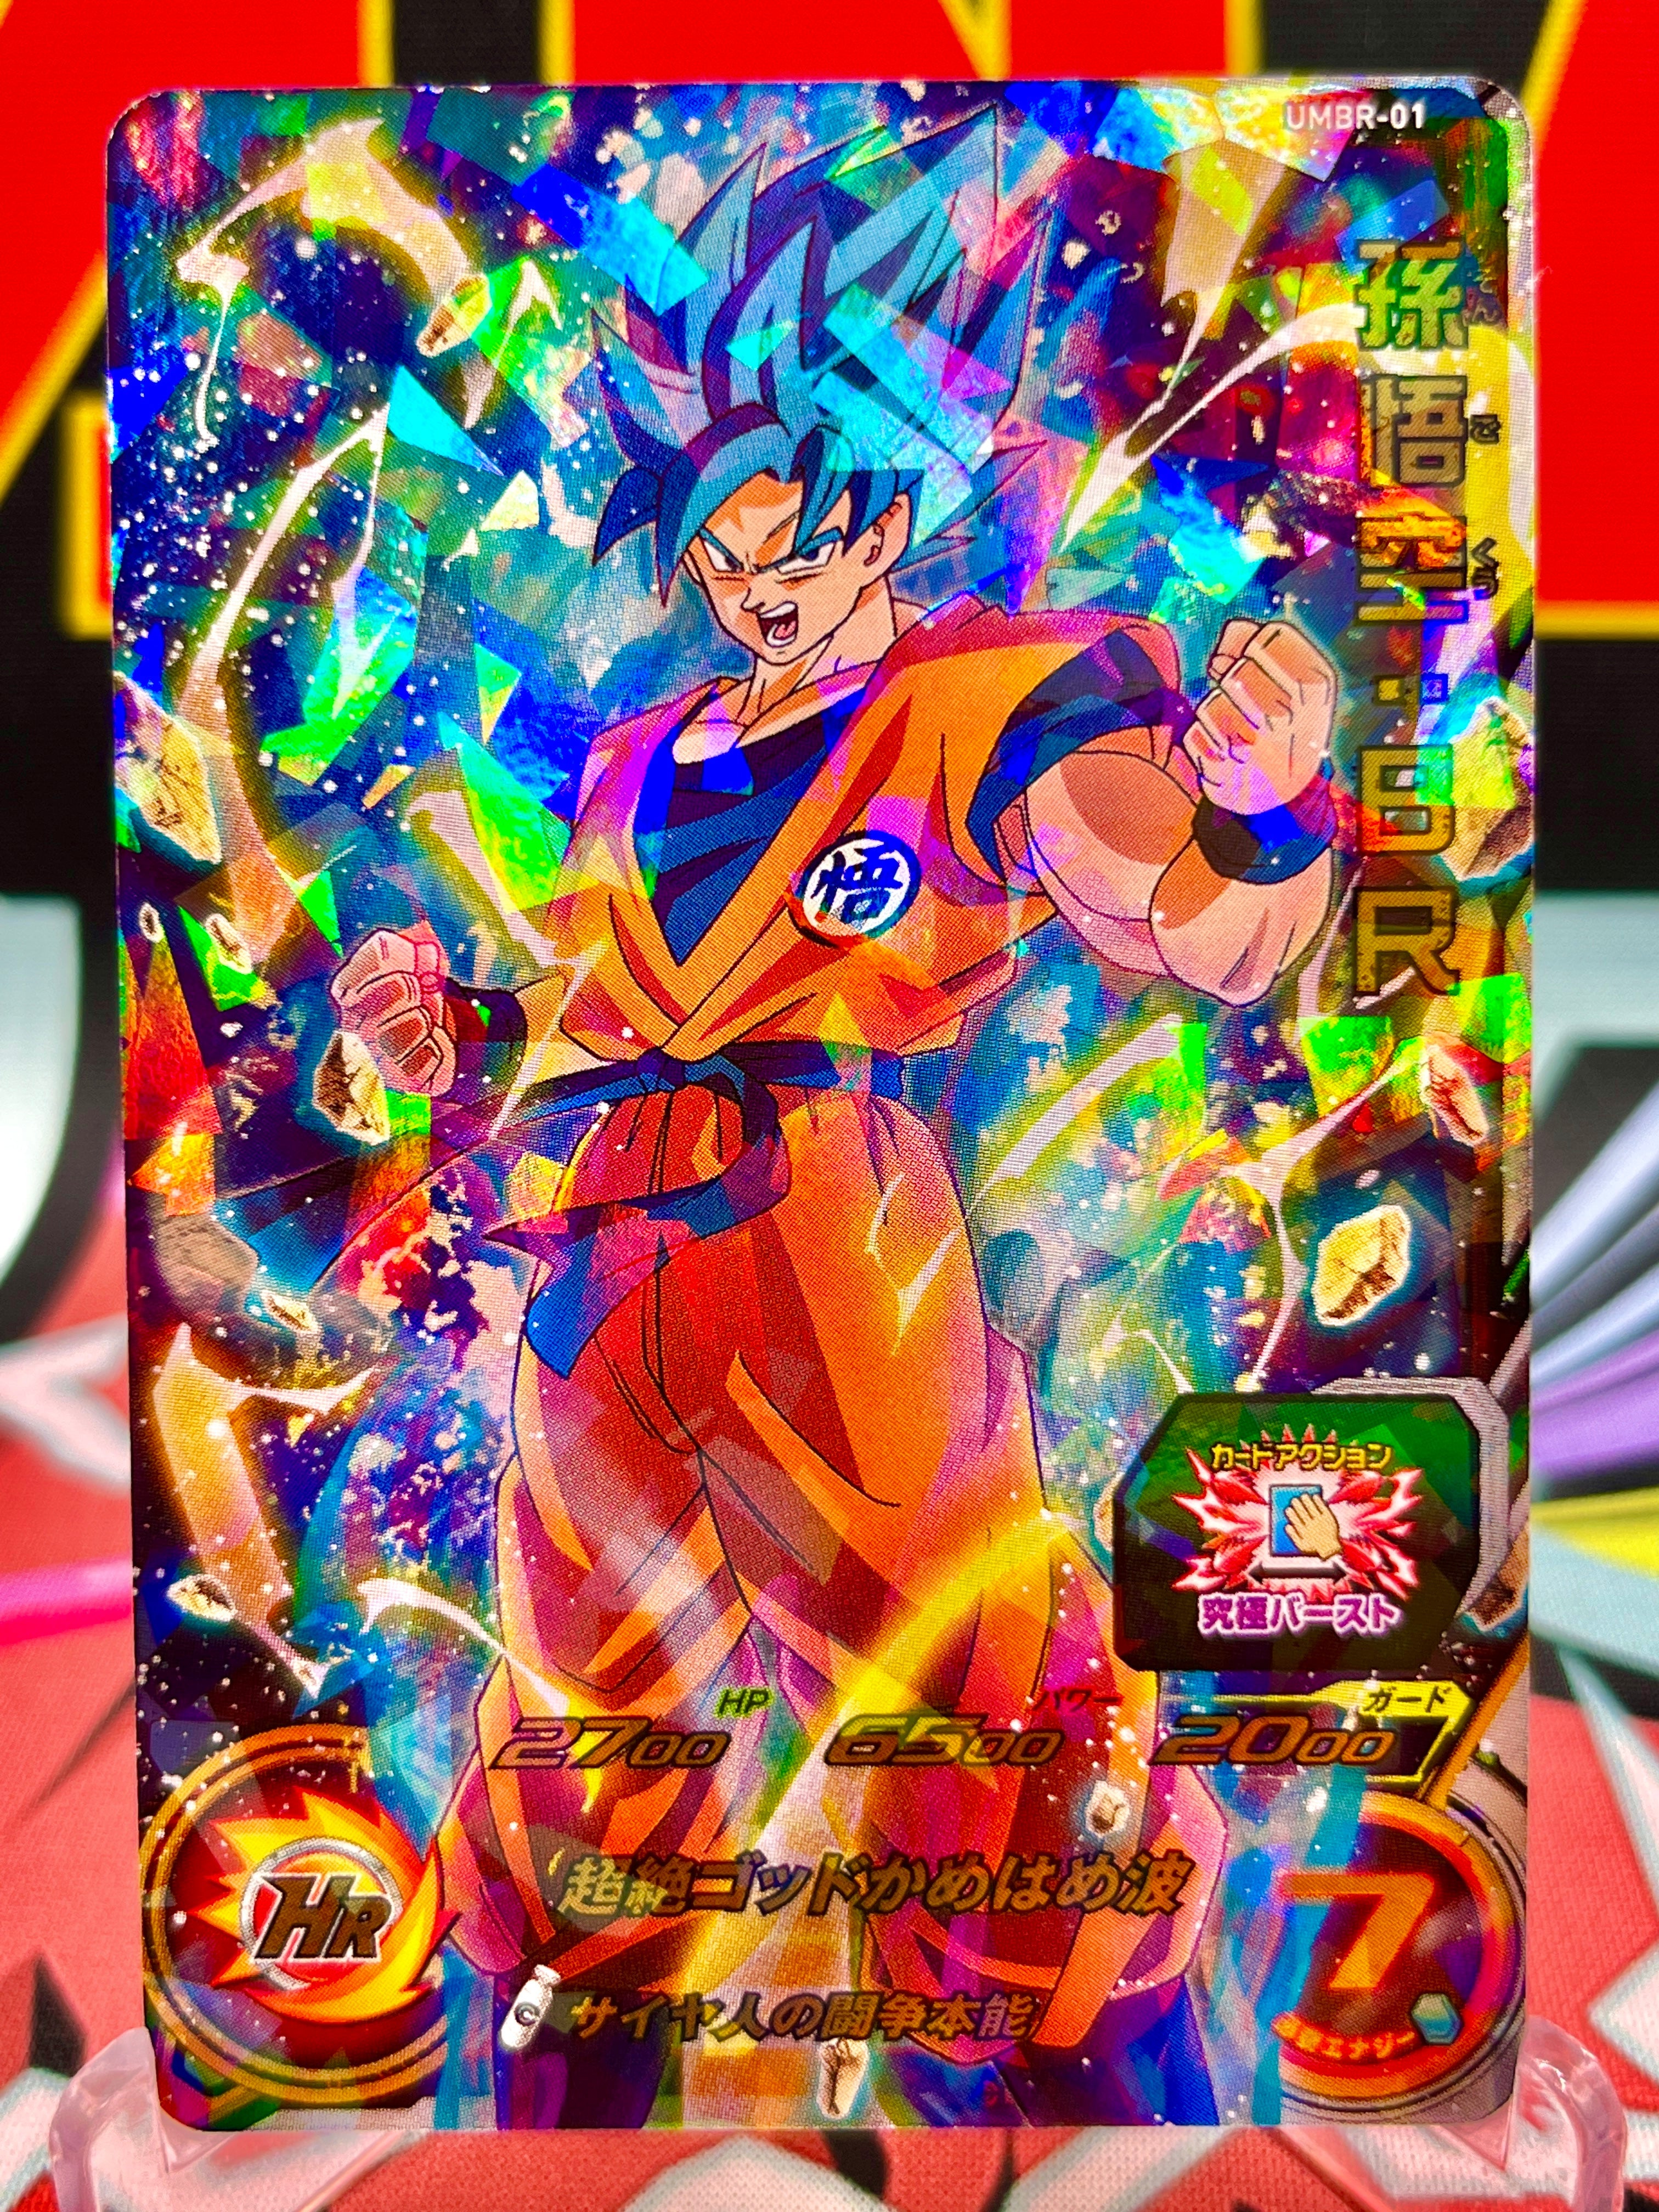 UMBR-01 Son Goku: BR Promo (2018)